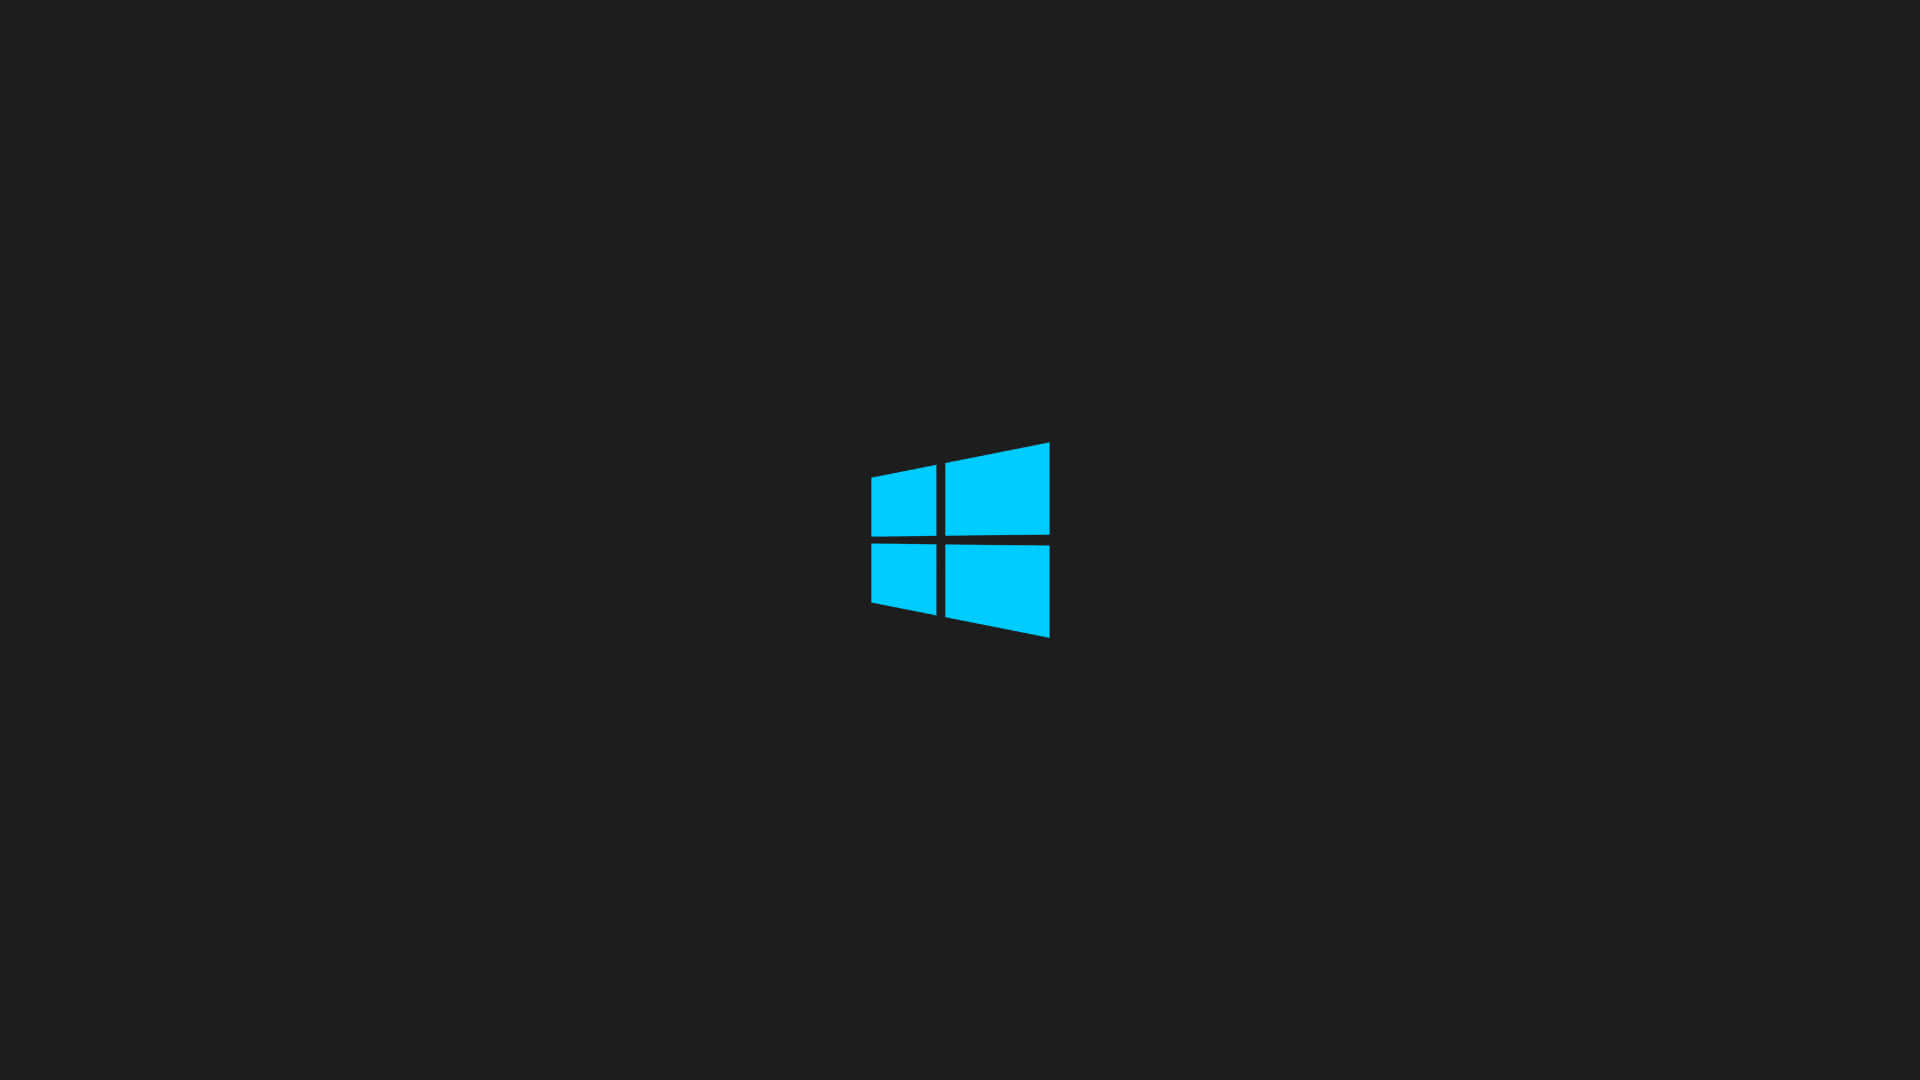 Windows Logo On A Black Background Wallpaper